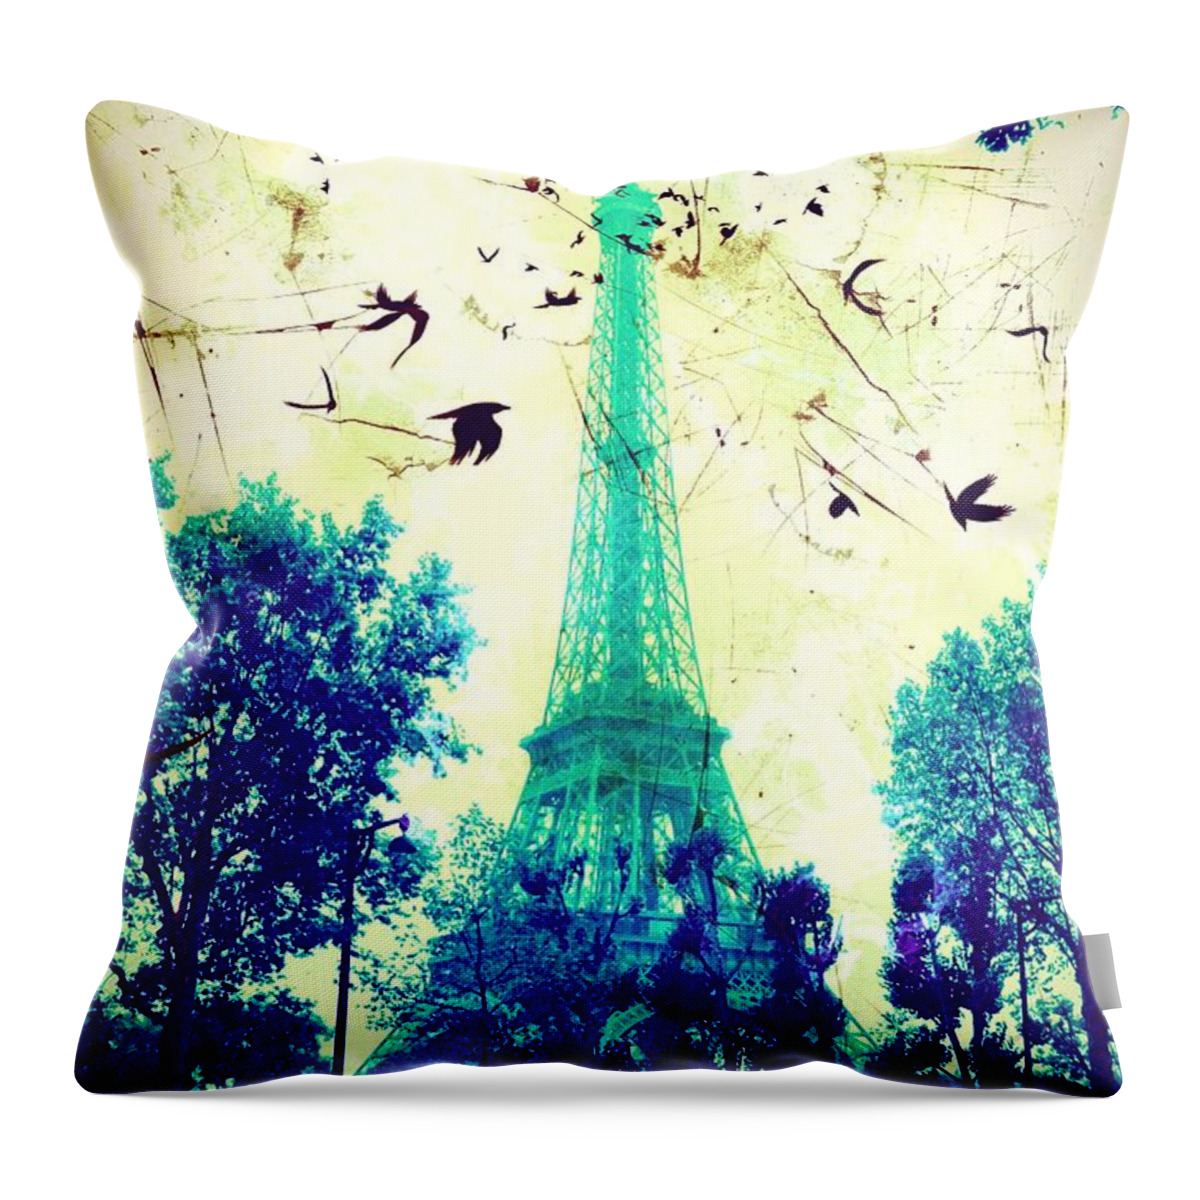 Eiffel Tower Throw Pillow featuring the digital art Eiffel Tower #4 by Marina McLain